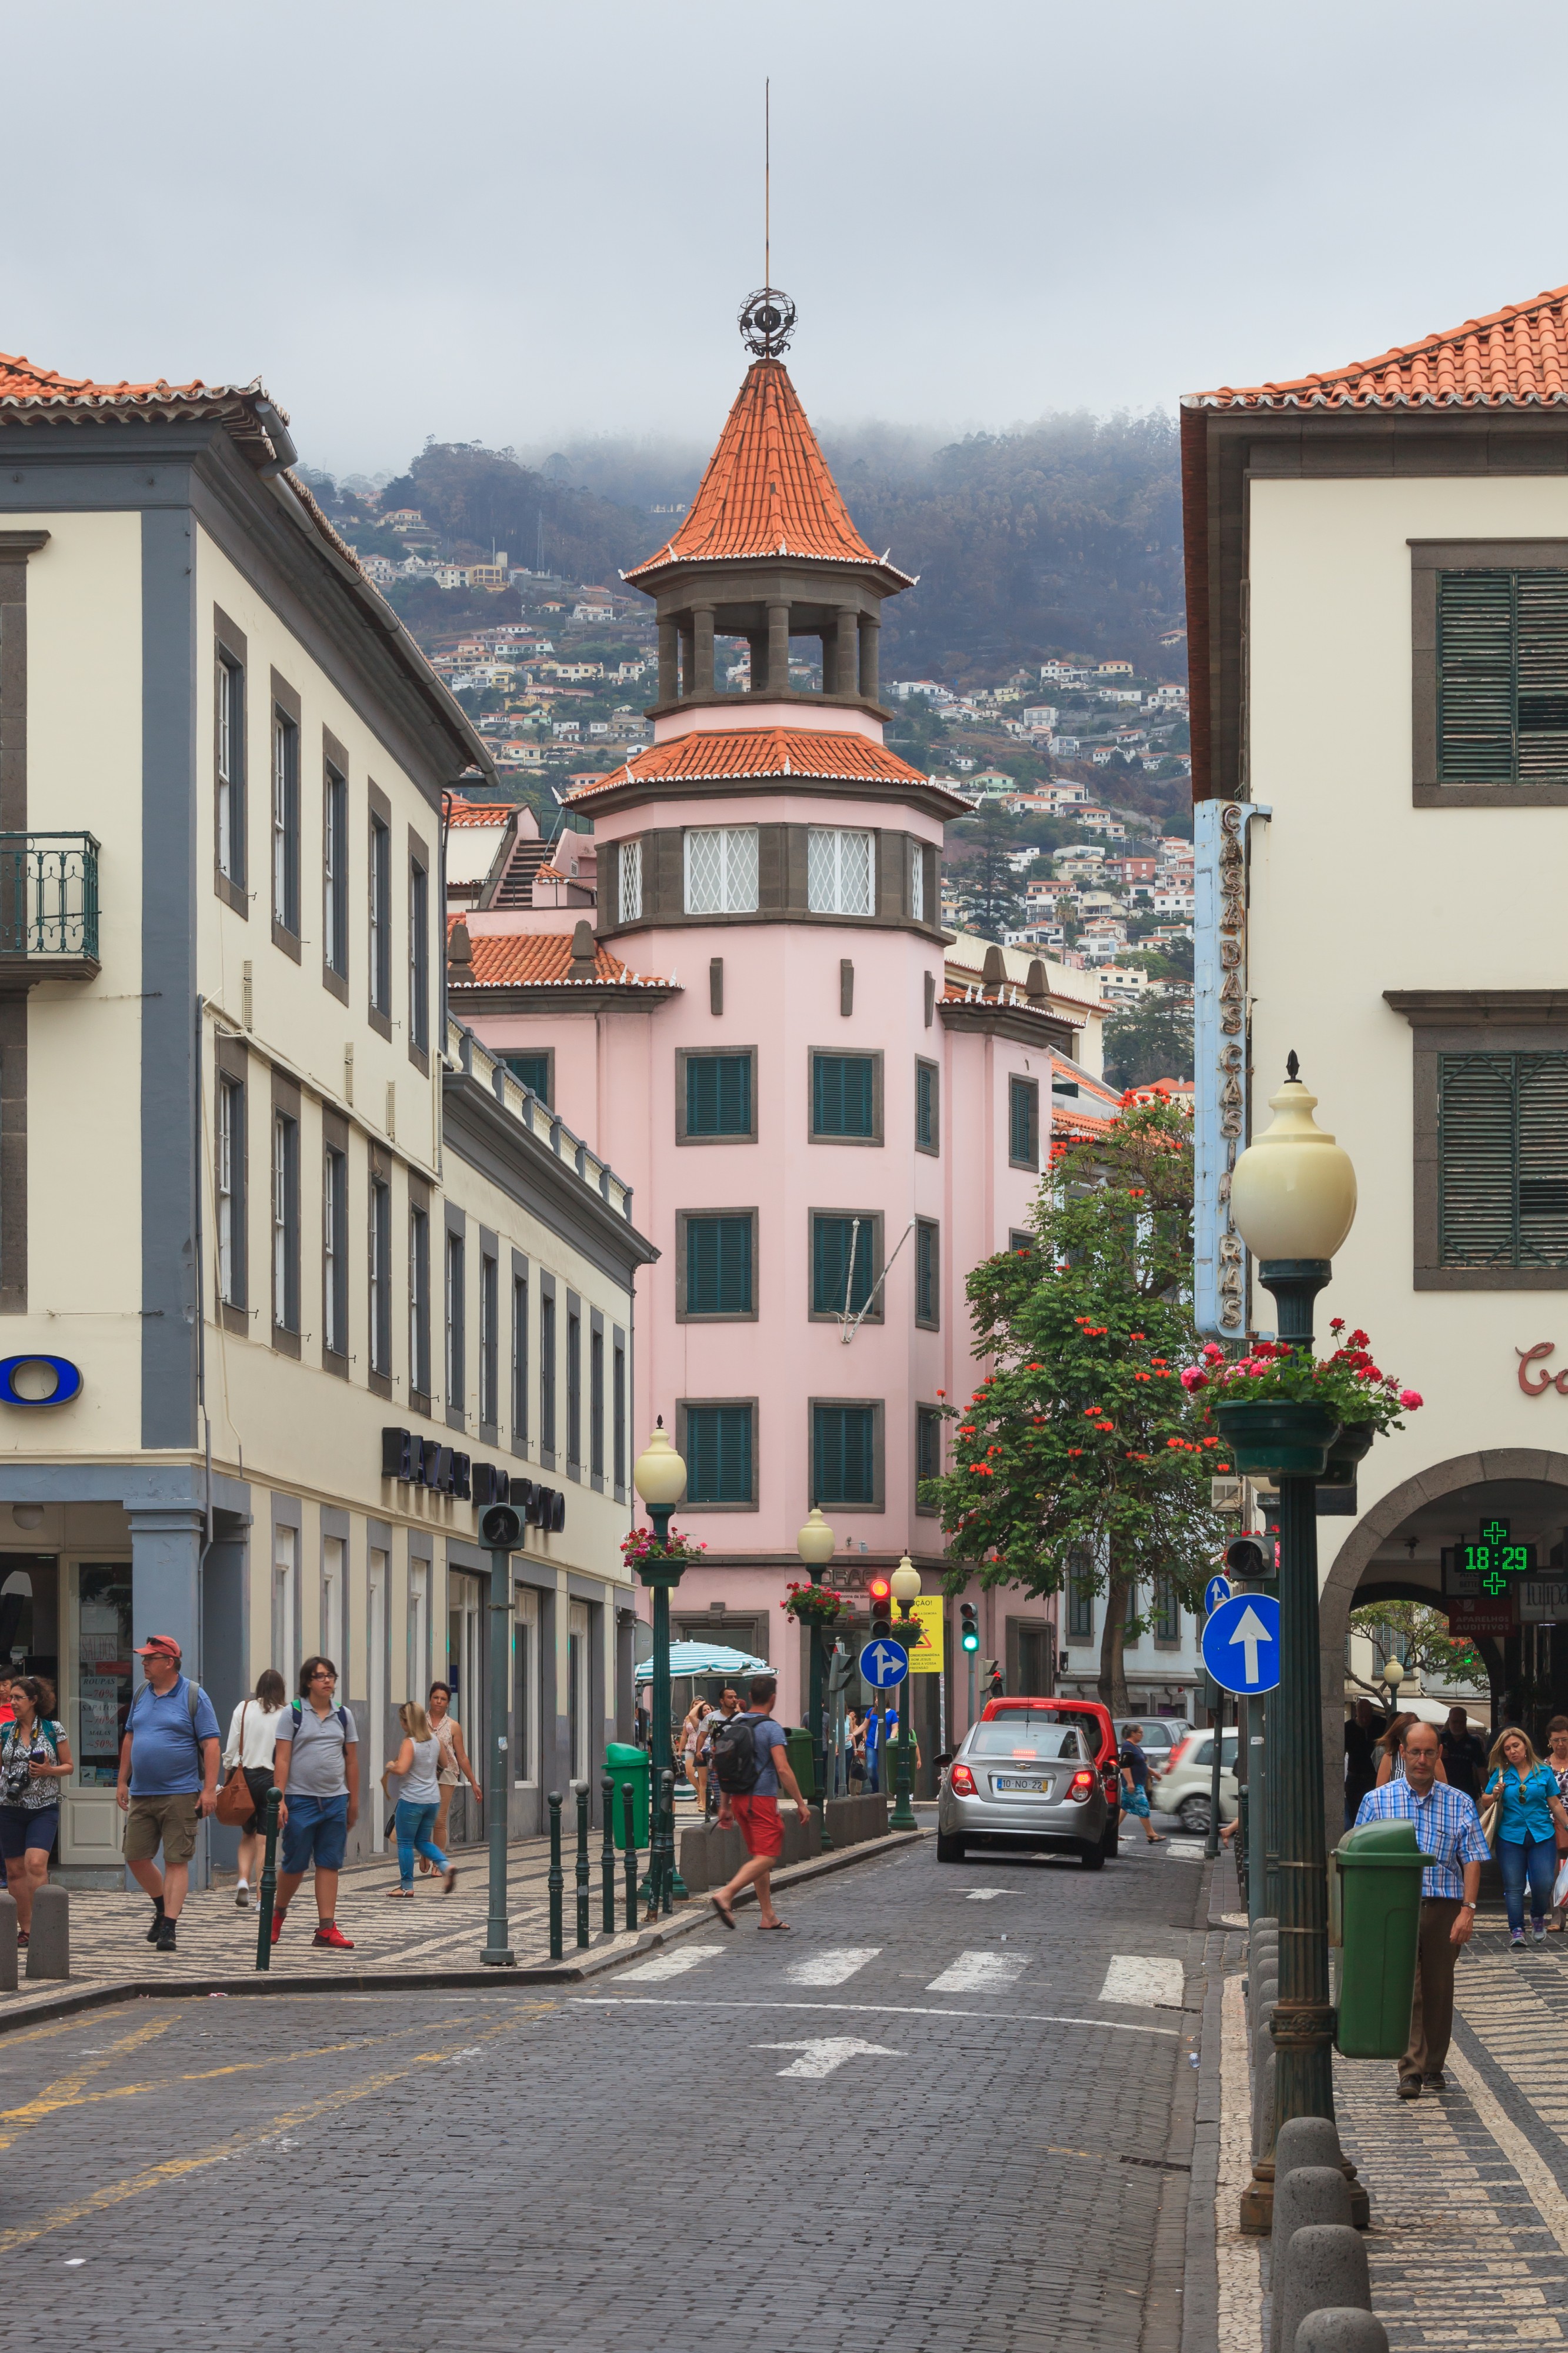 2016. Edificio rosa no Funchal. Madeira. Portugal